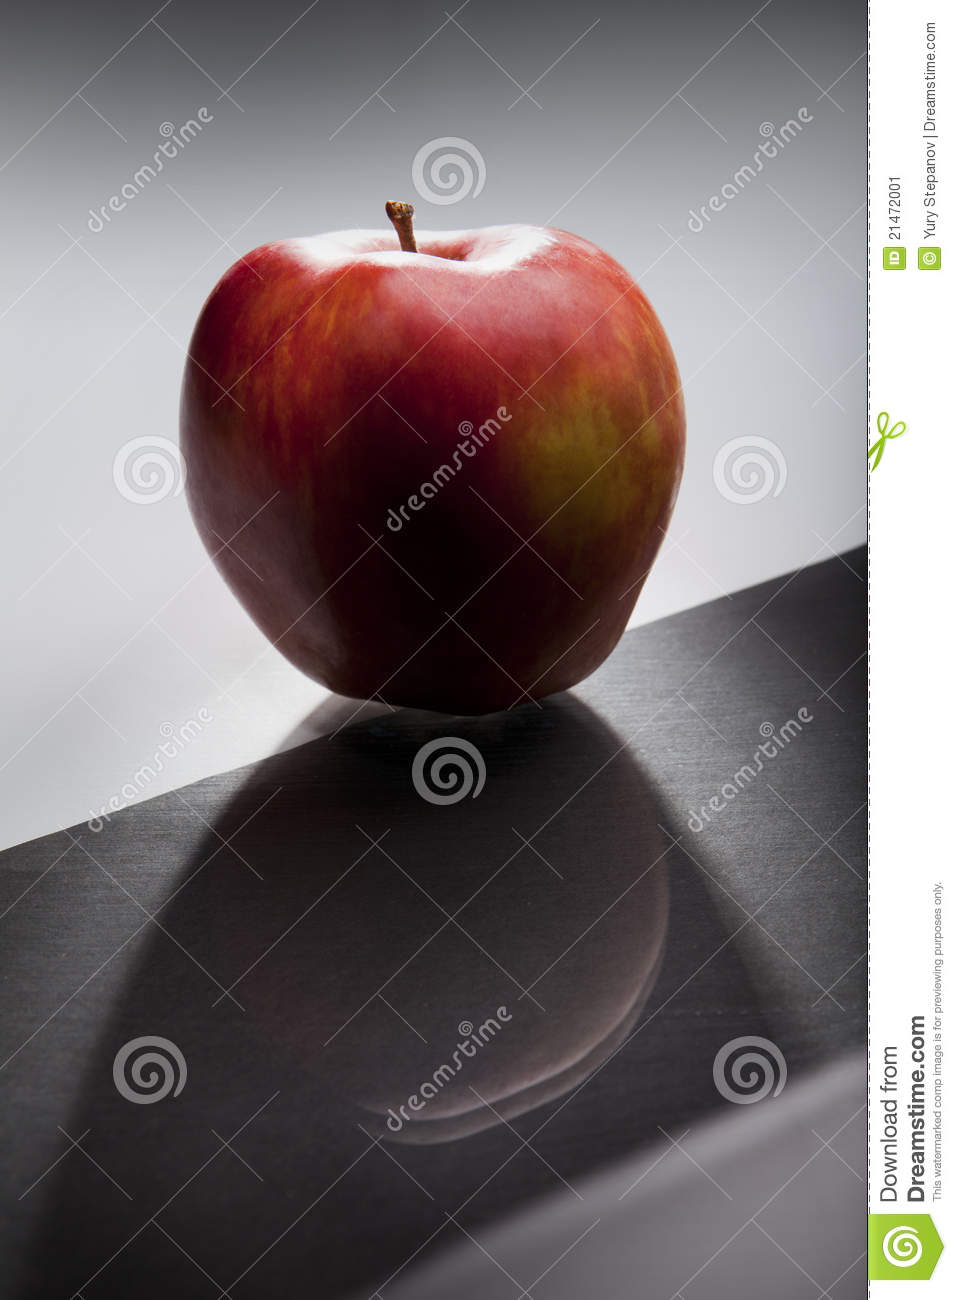 Dark Red Apple Stock Image   Image  21472001